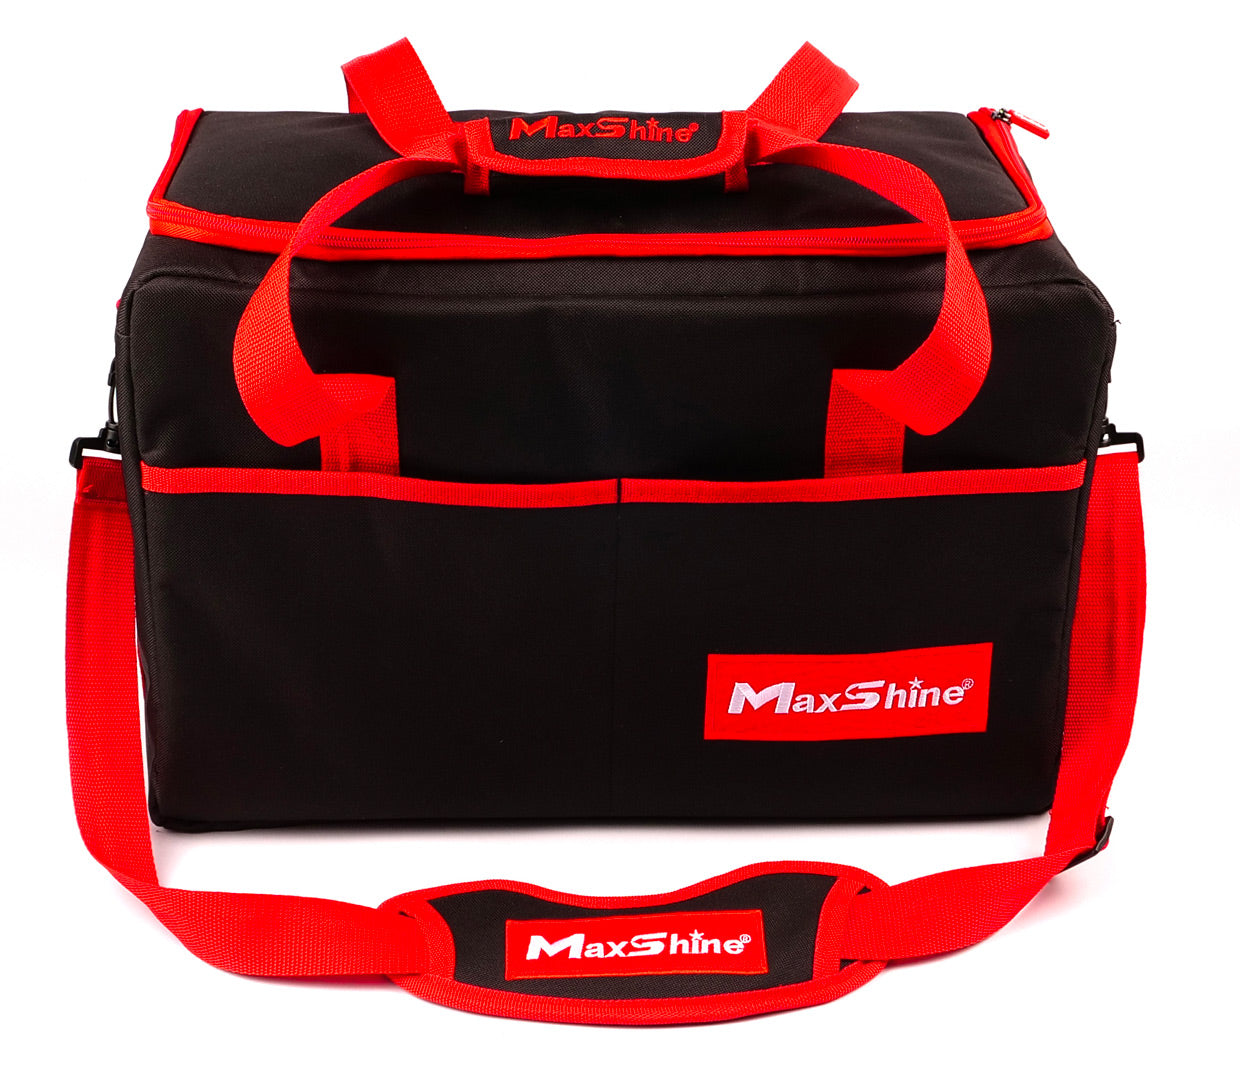 Maxshine Detailing Bag - Large